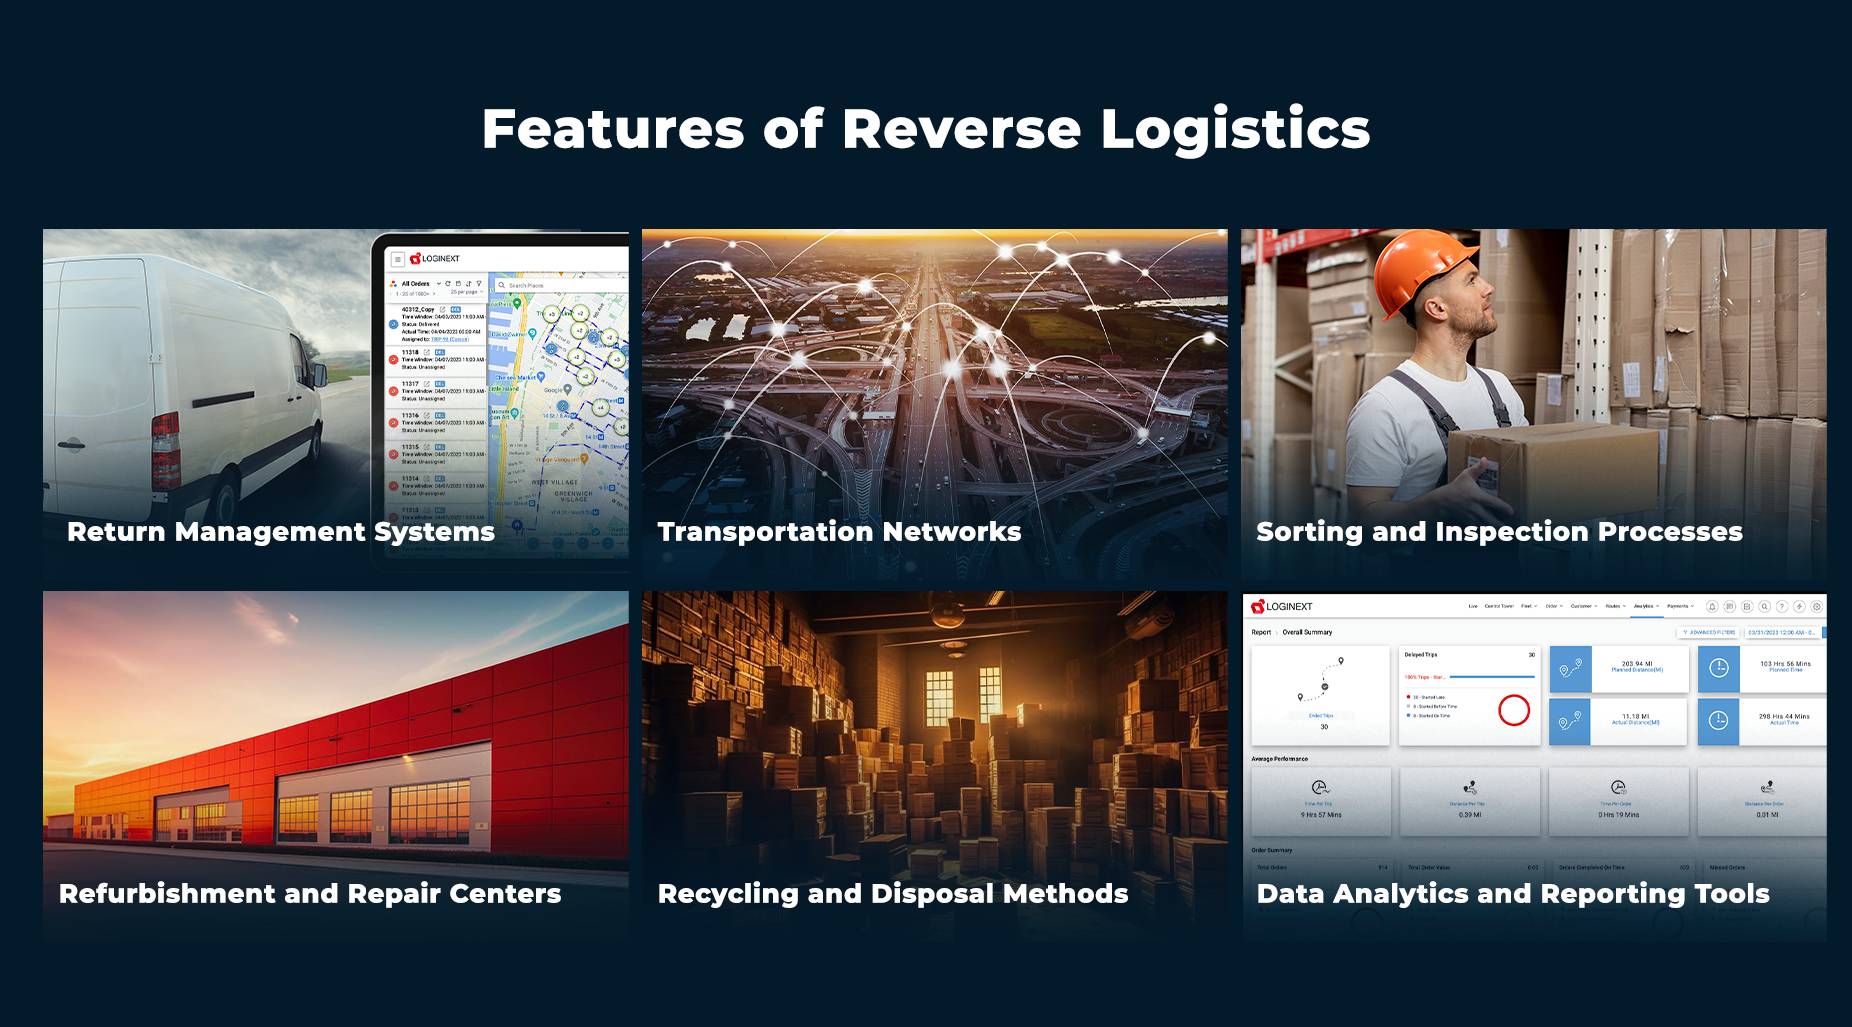 Features of reverse logistics